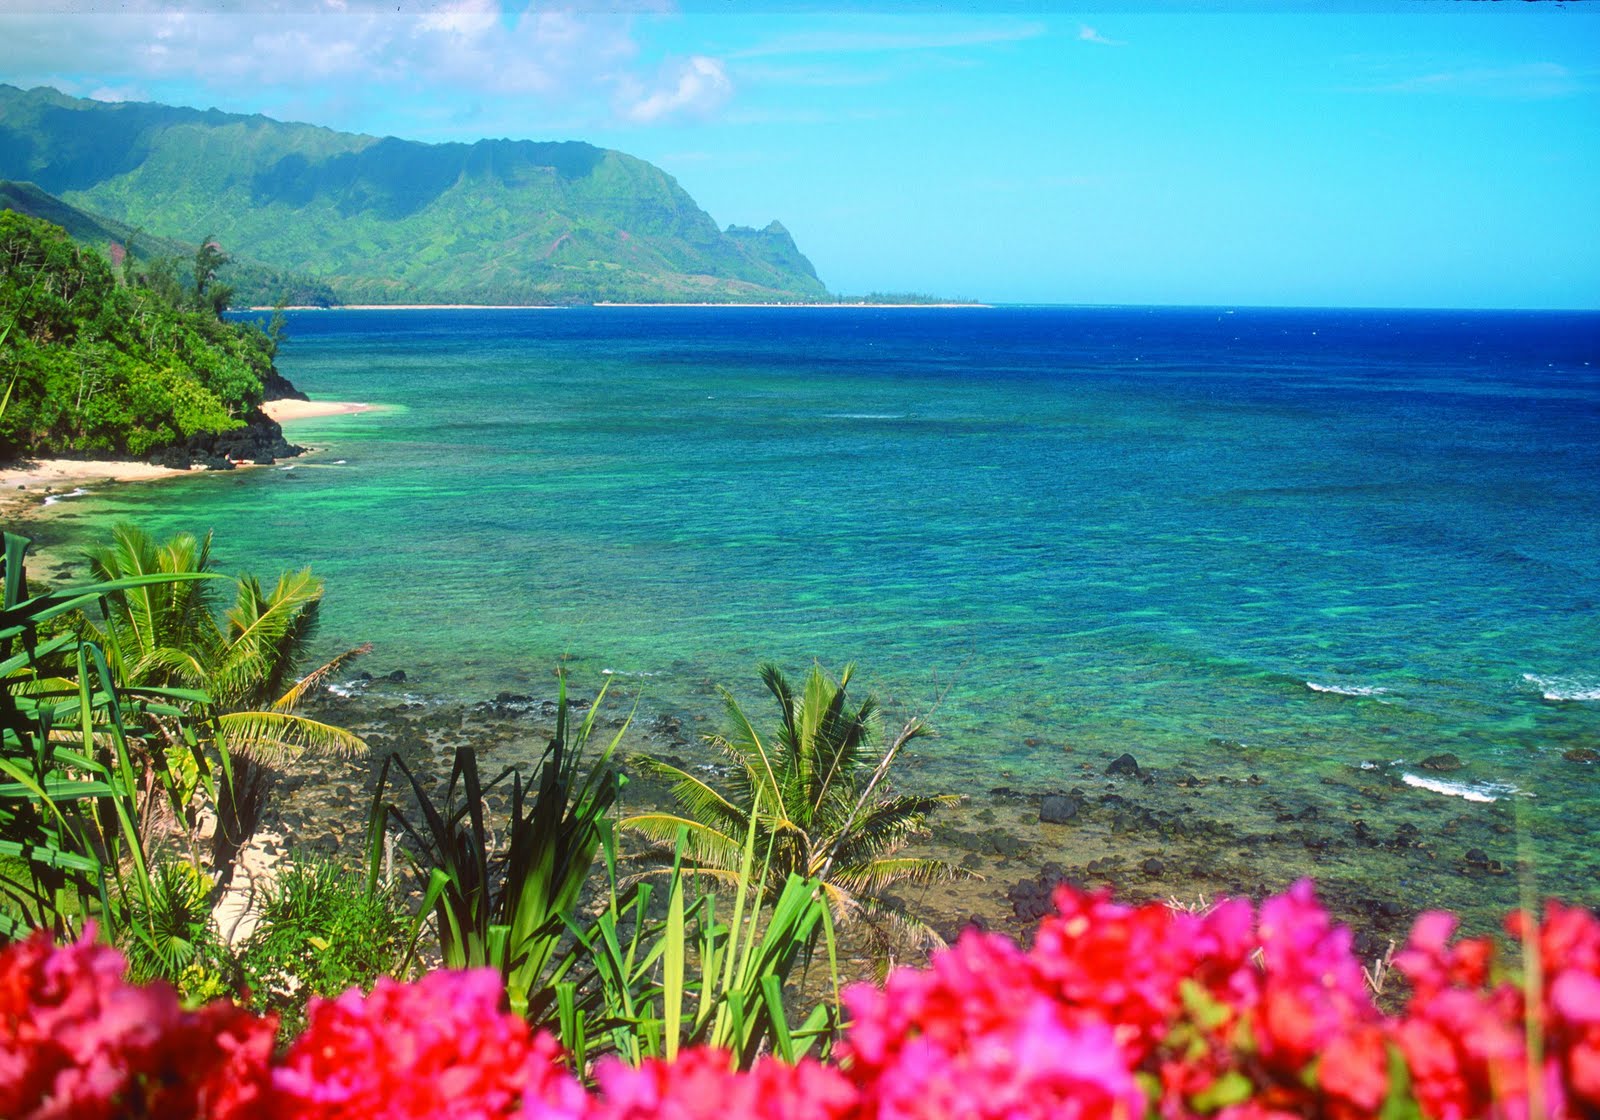 Hawaii Beach Images  Free Download on Freepik